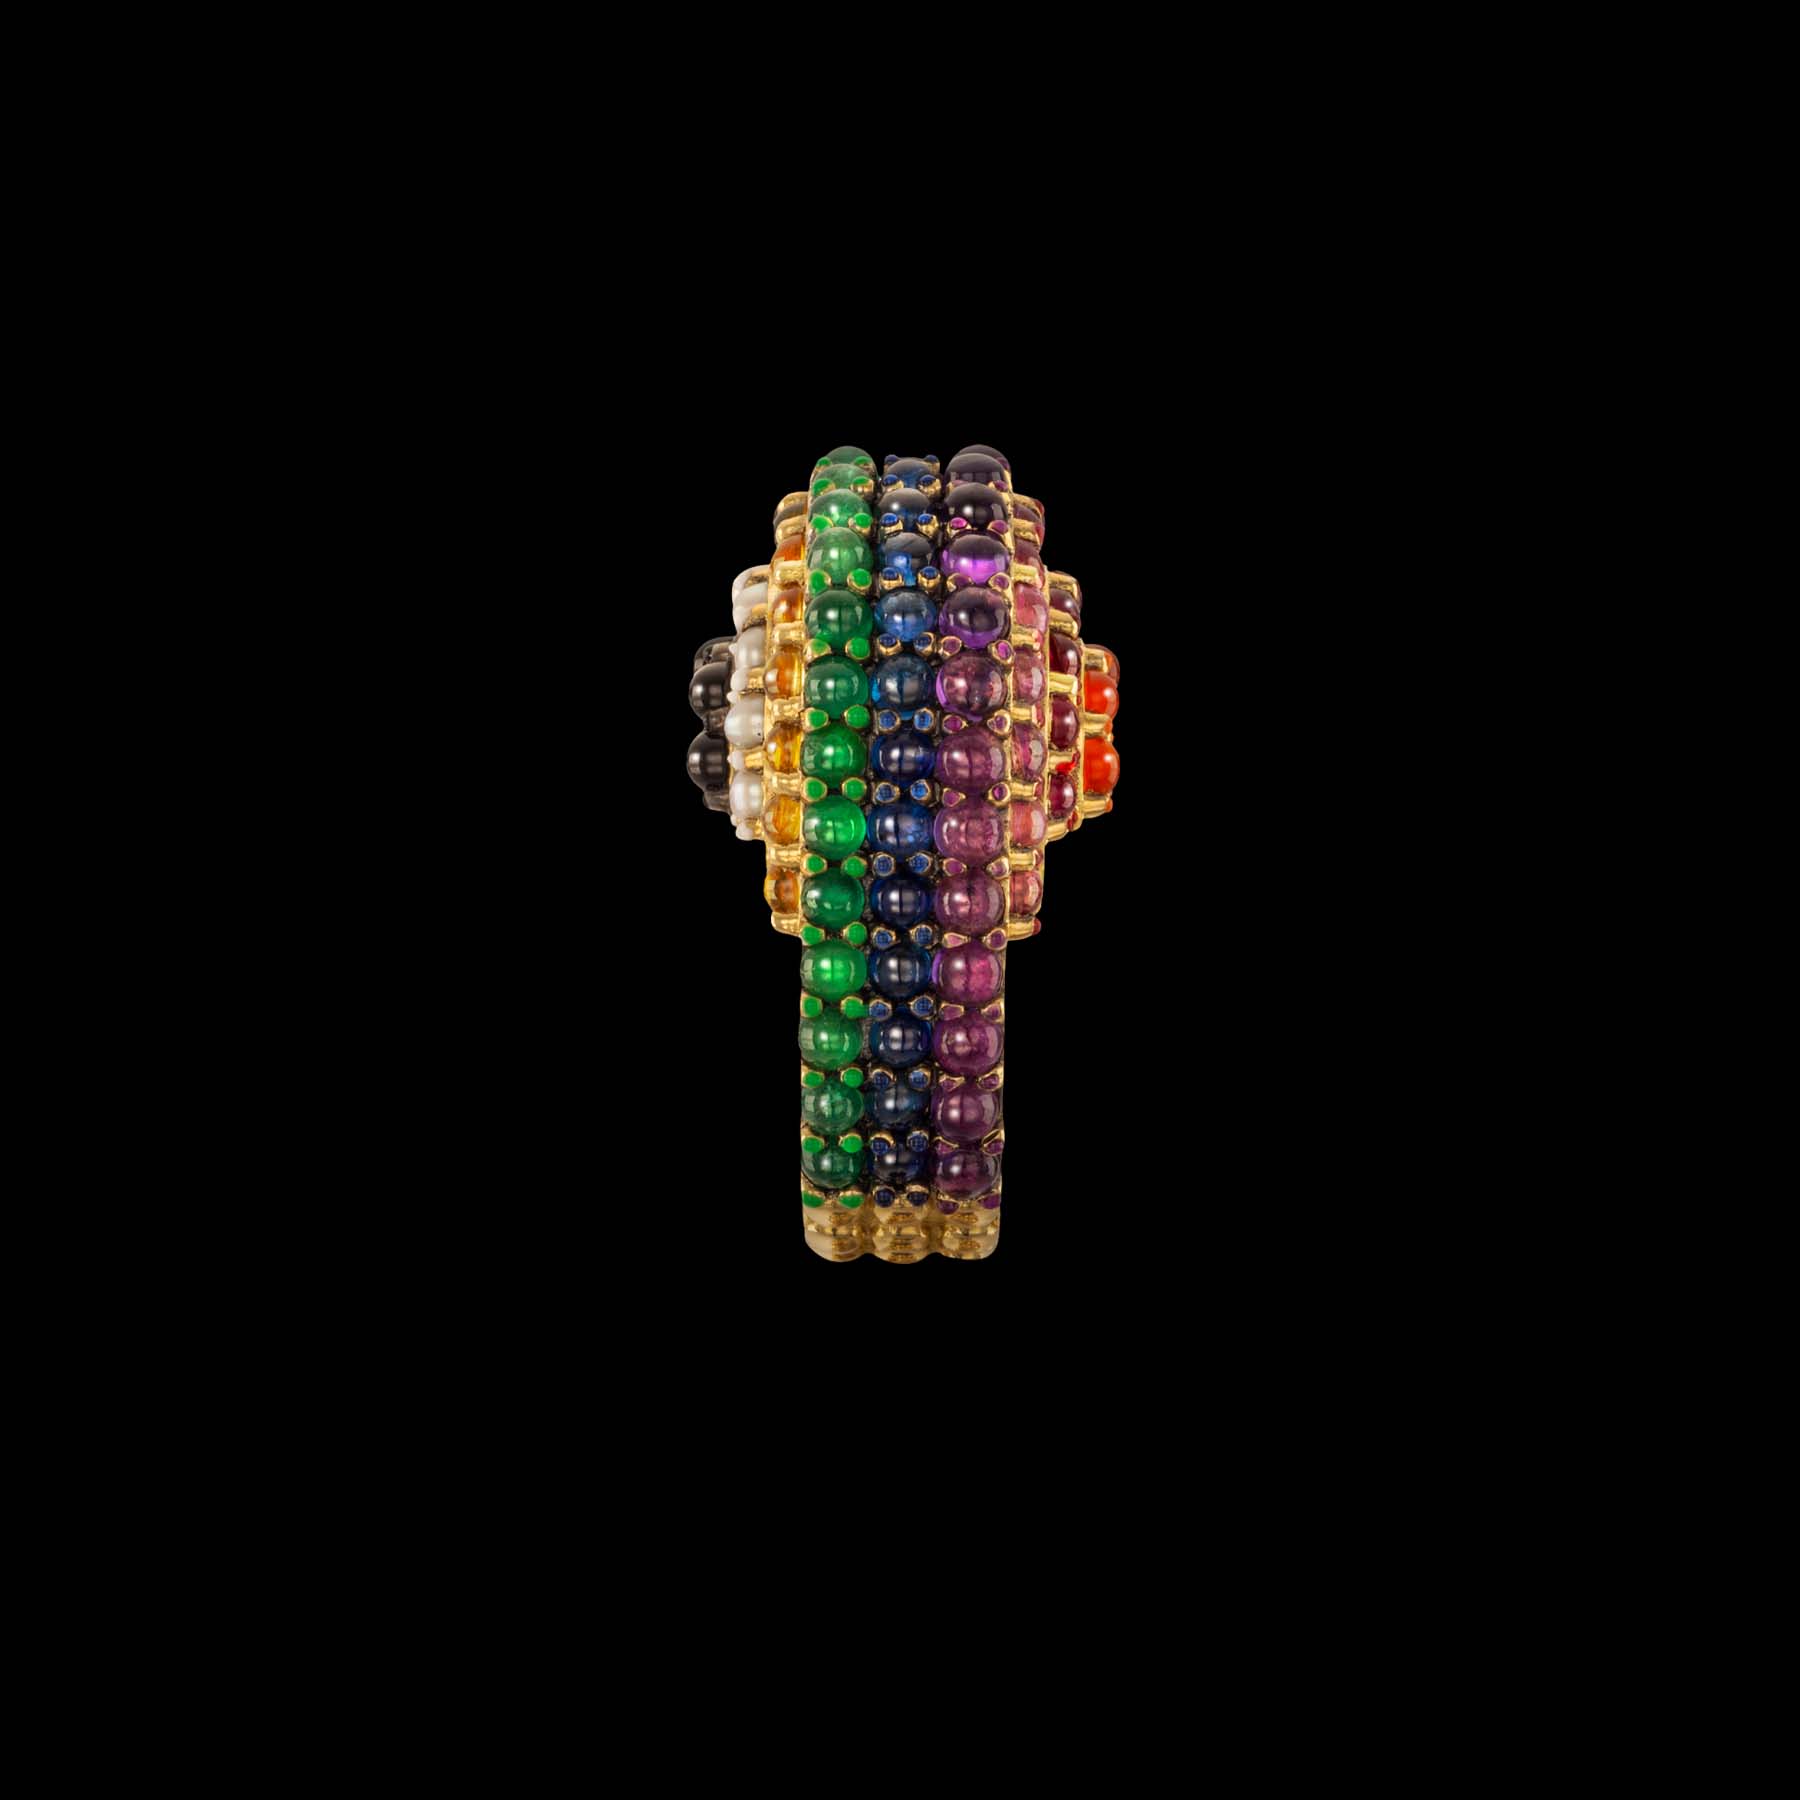 Colourway Rainbow ring by designer Solange Azagury-Partridge - 18k Yellow Gold, gemstones and enamel - vertical side view